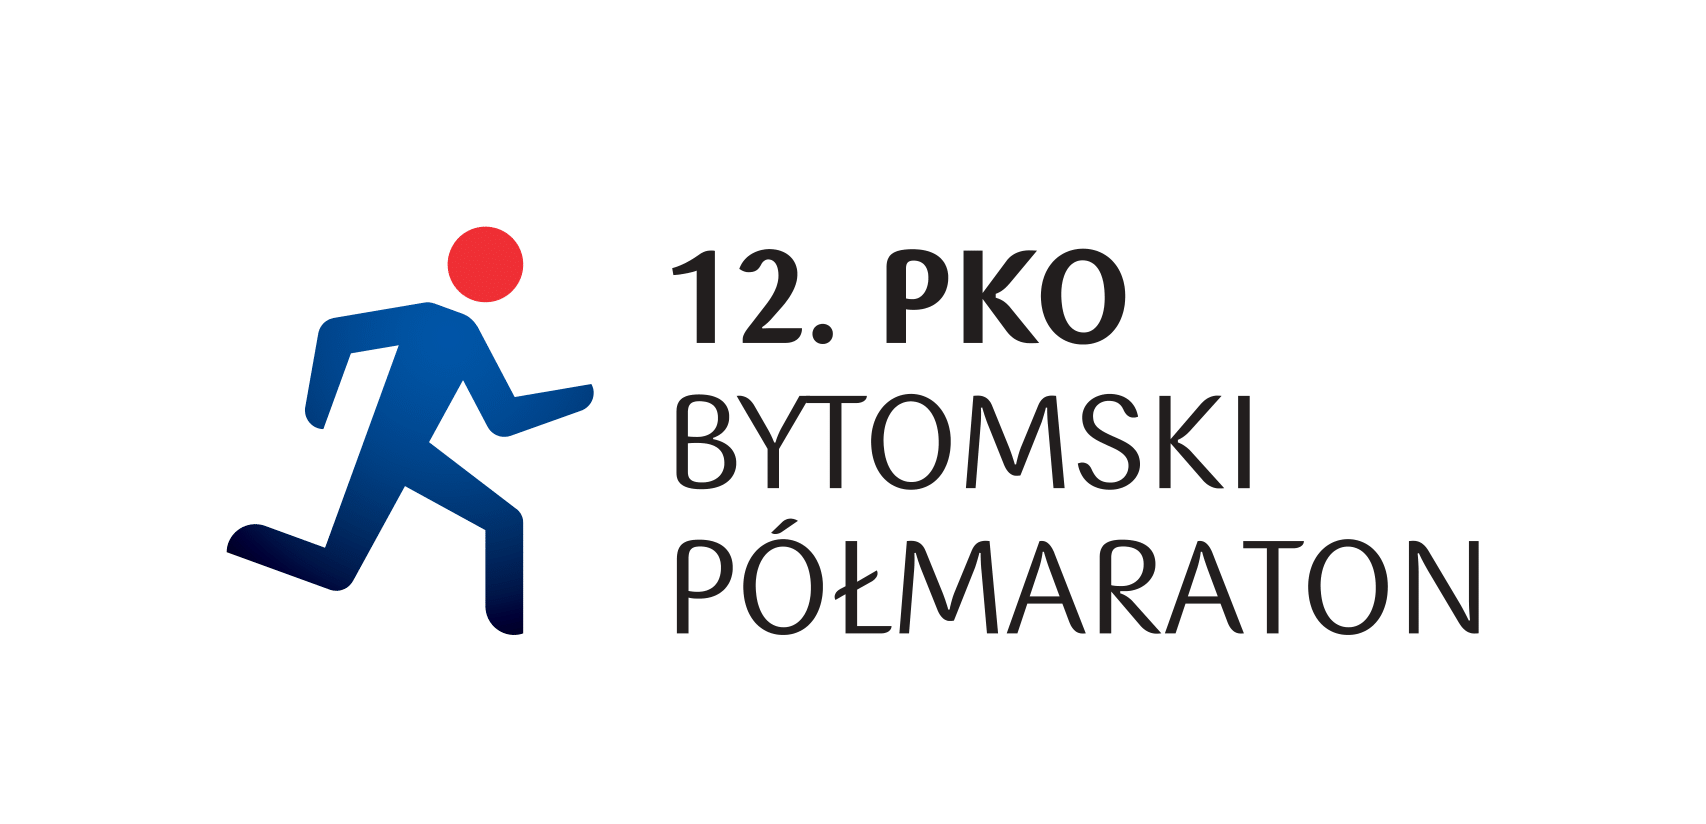 12. PKO Bytomski Polmaraton